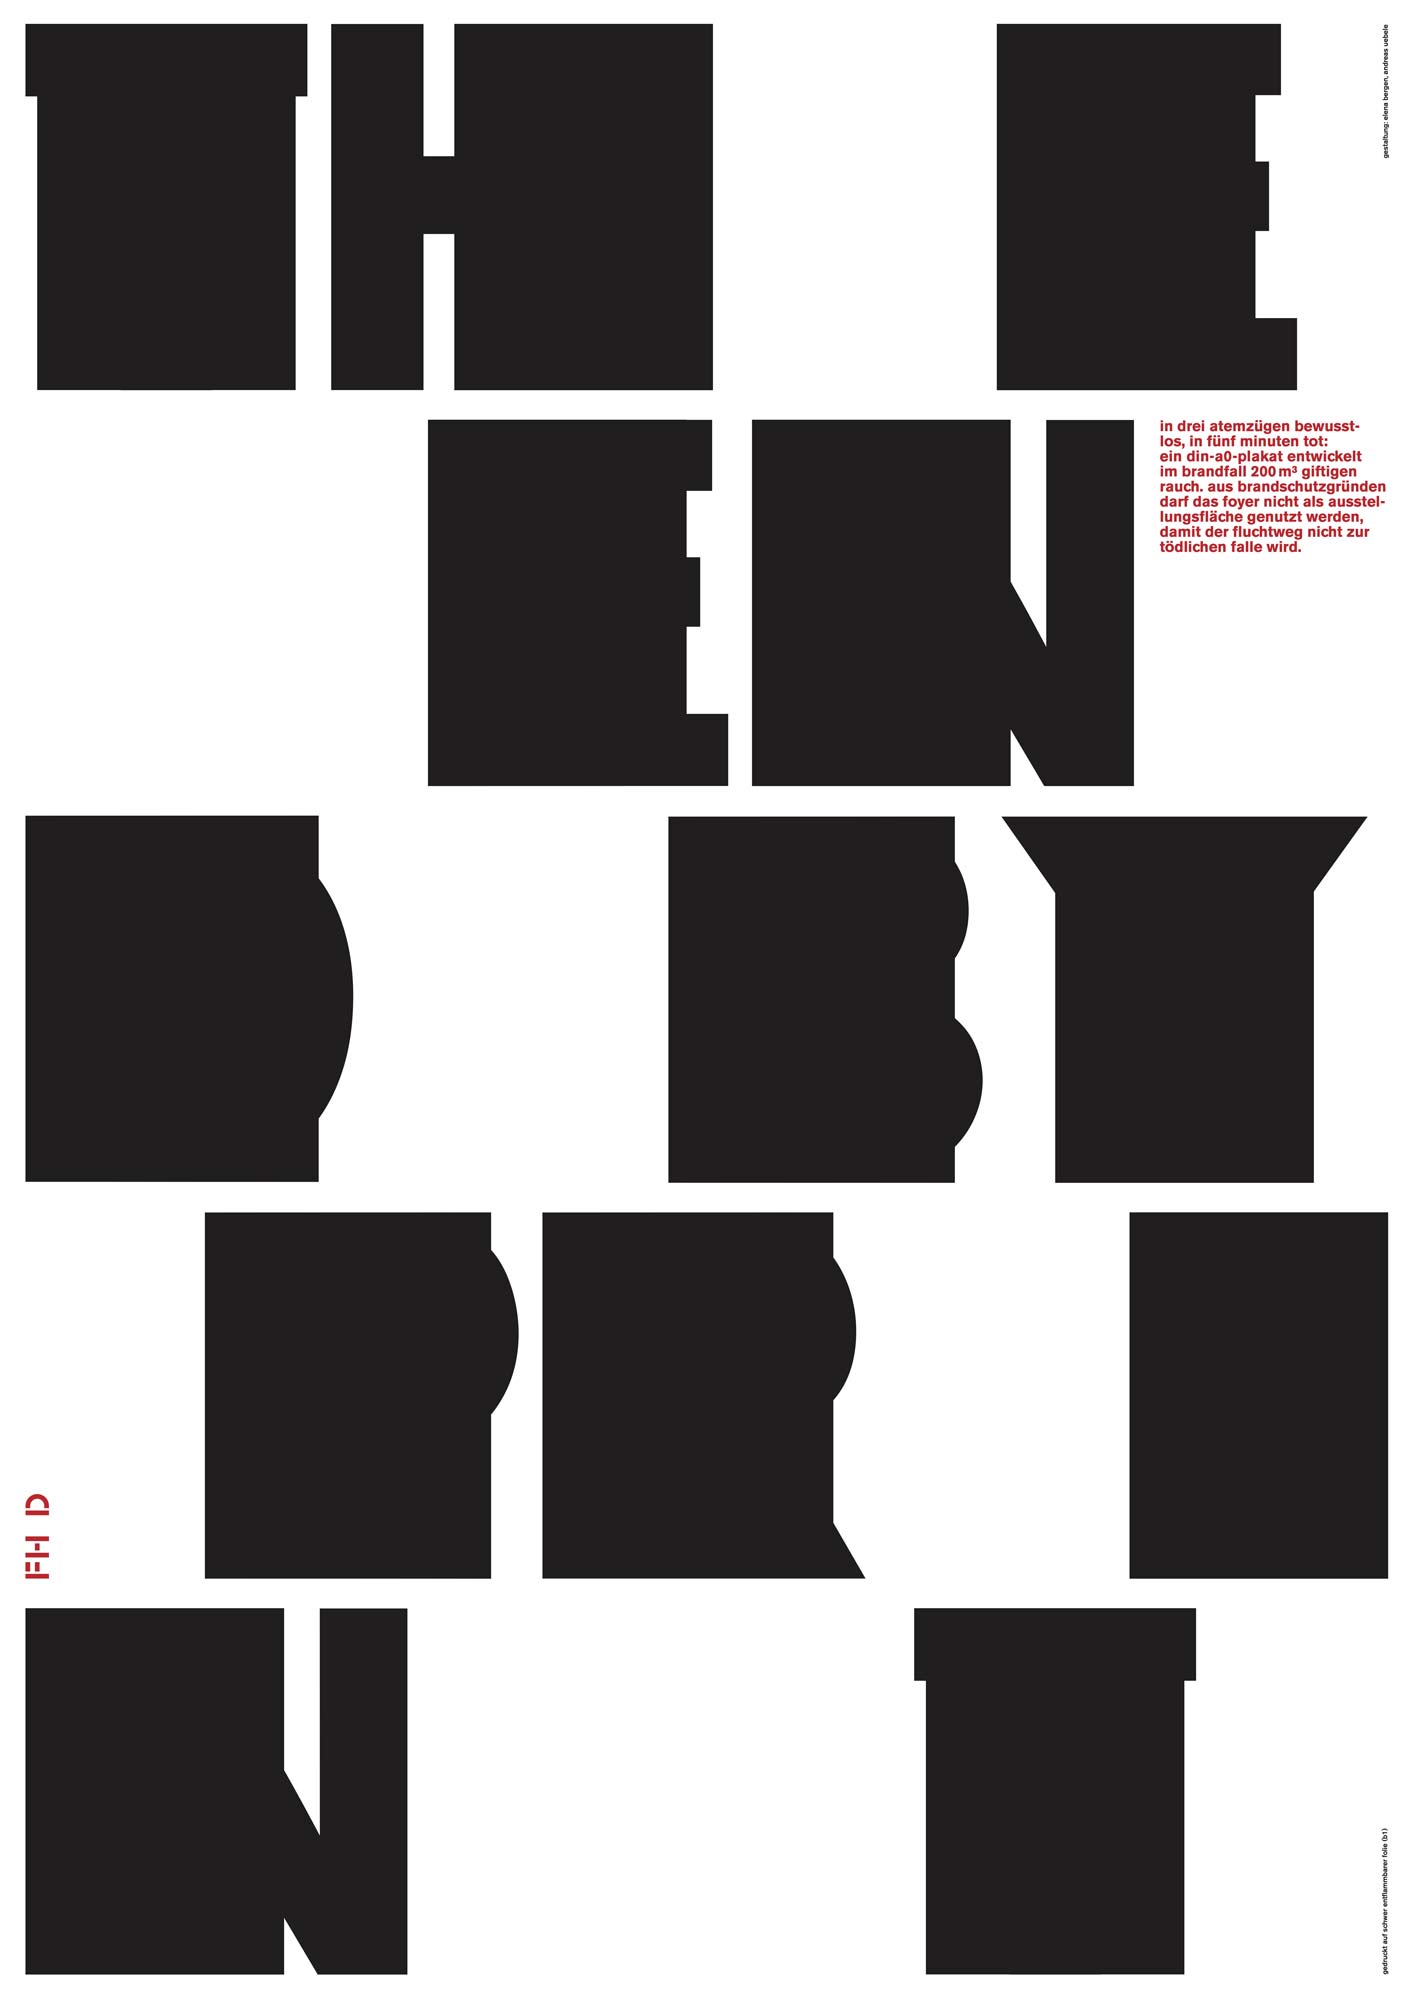 Gestaltet: Andreas Uebele, Elena Bergen, Titel: The End By Print, Jahr: 2012